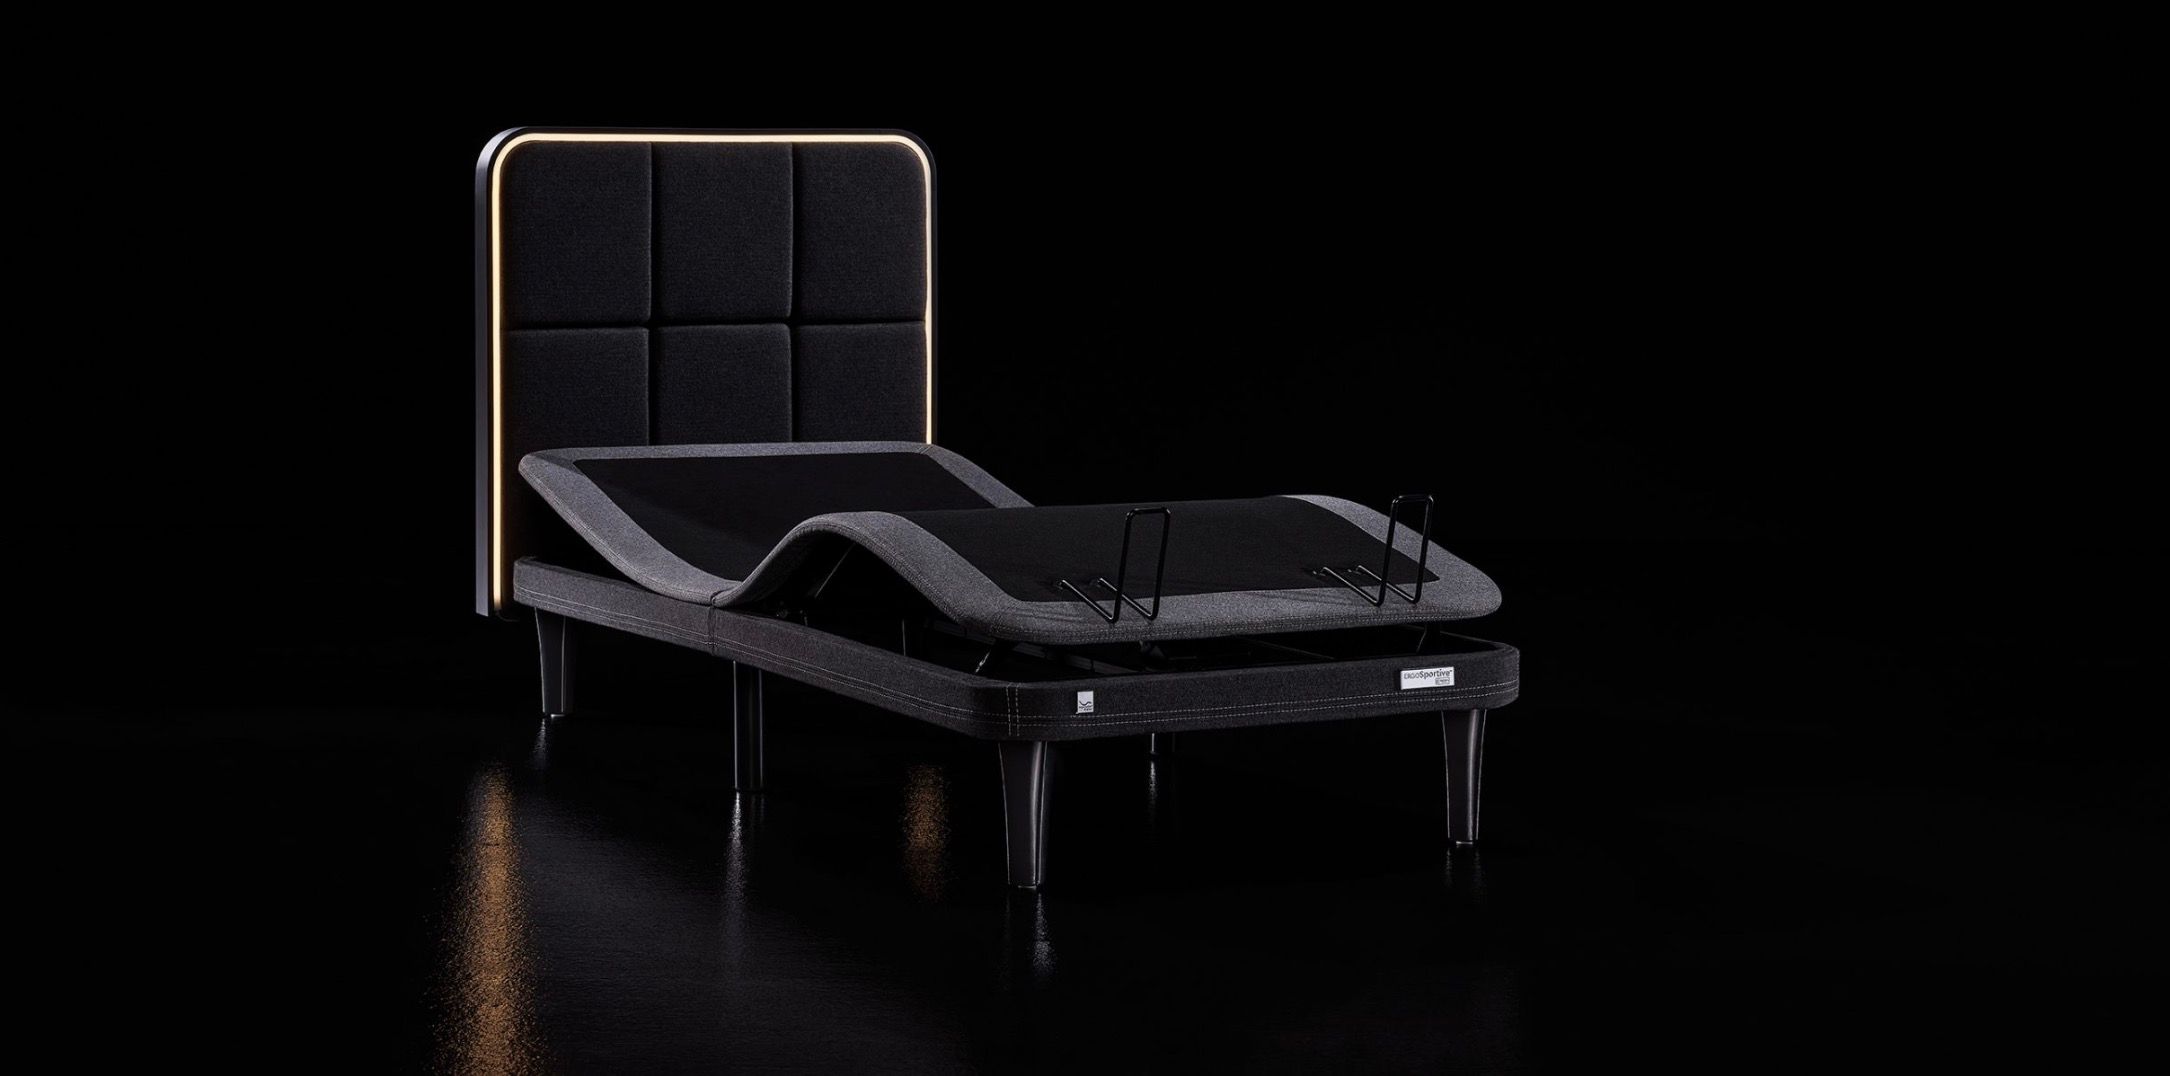 Product shot of ergosportive smart bed